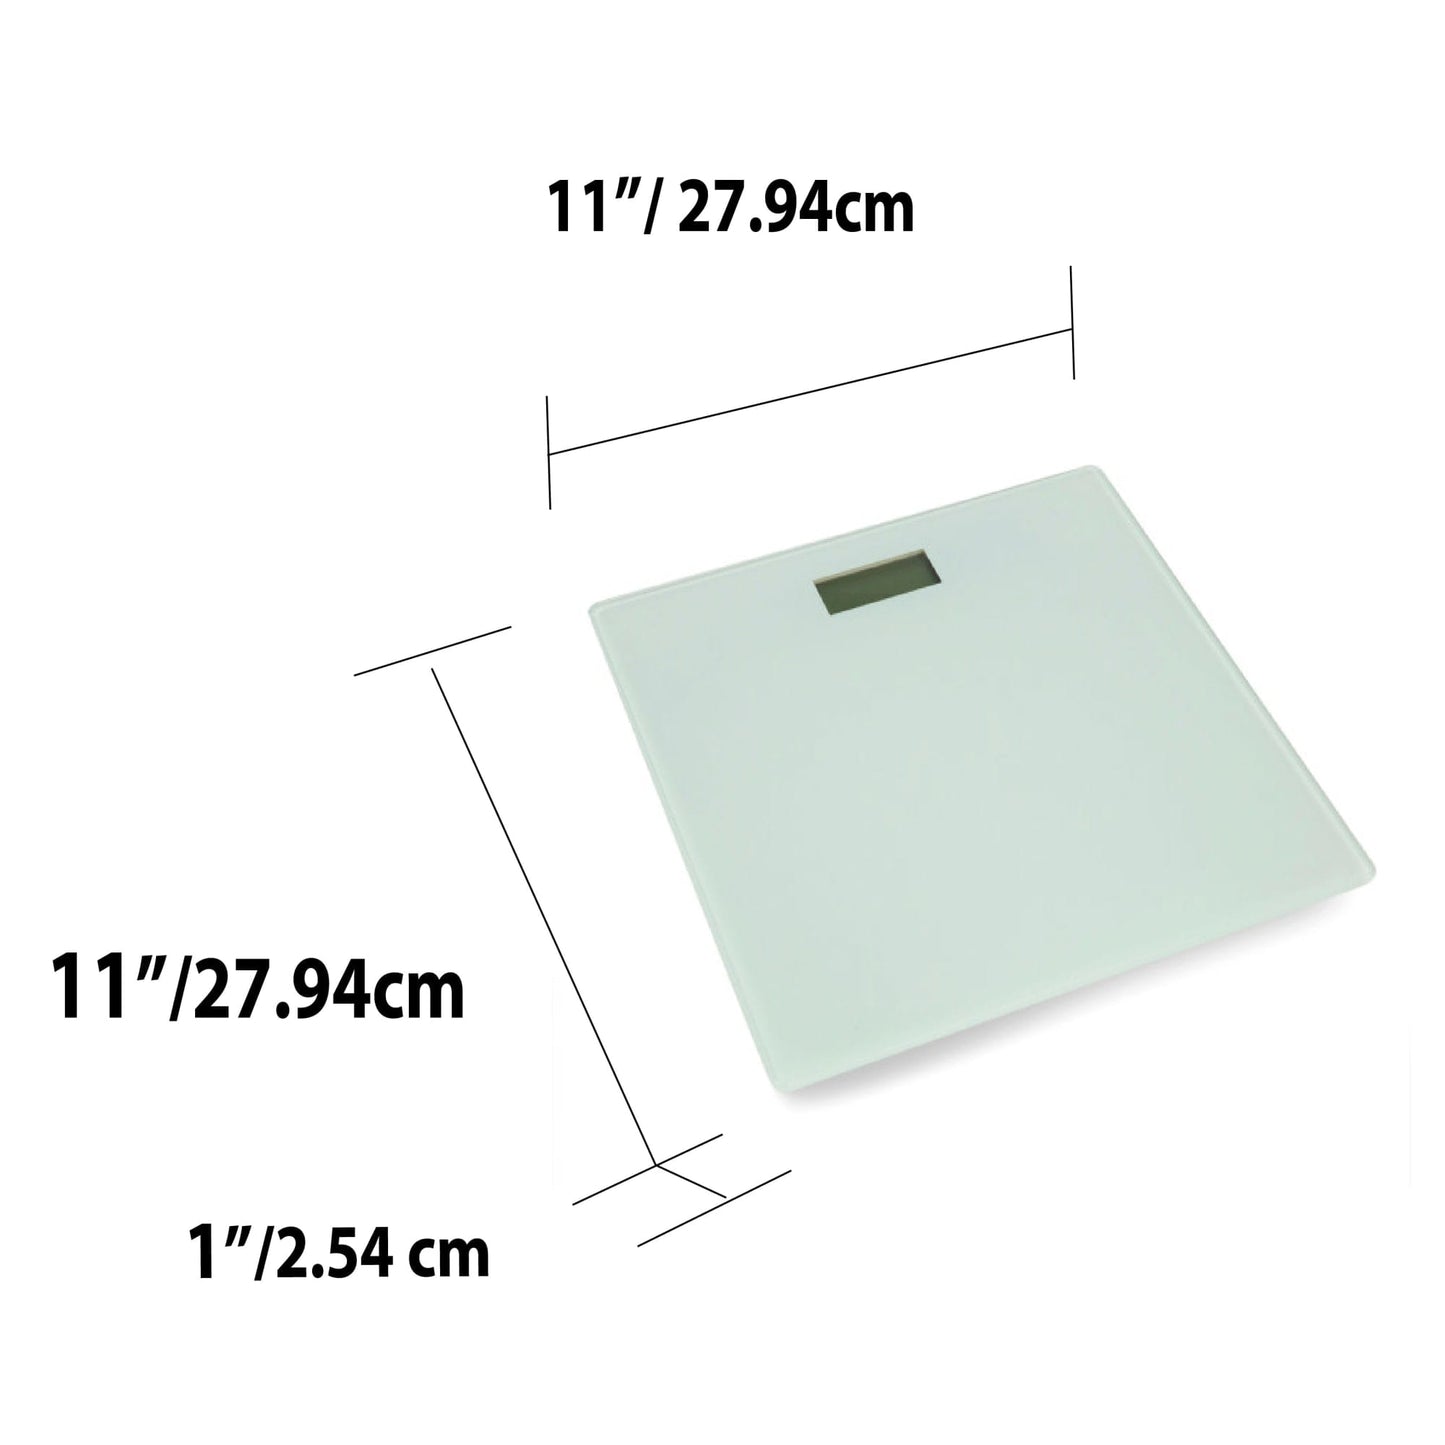 Contemporary Sleek LCD Display Digital Glass Bathroom Scale, White